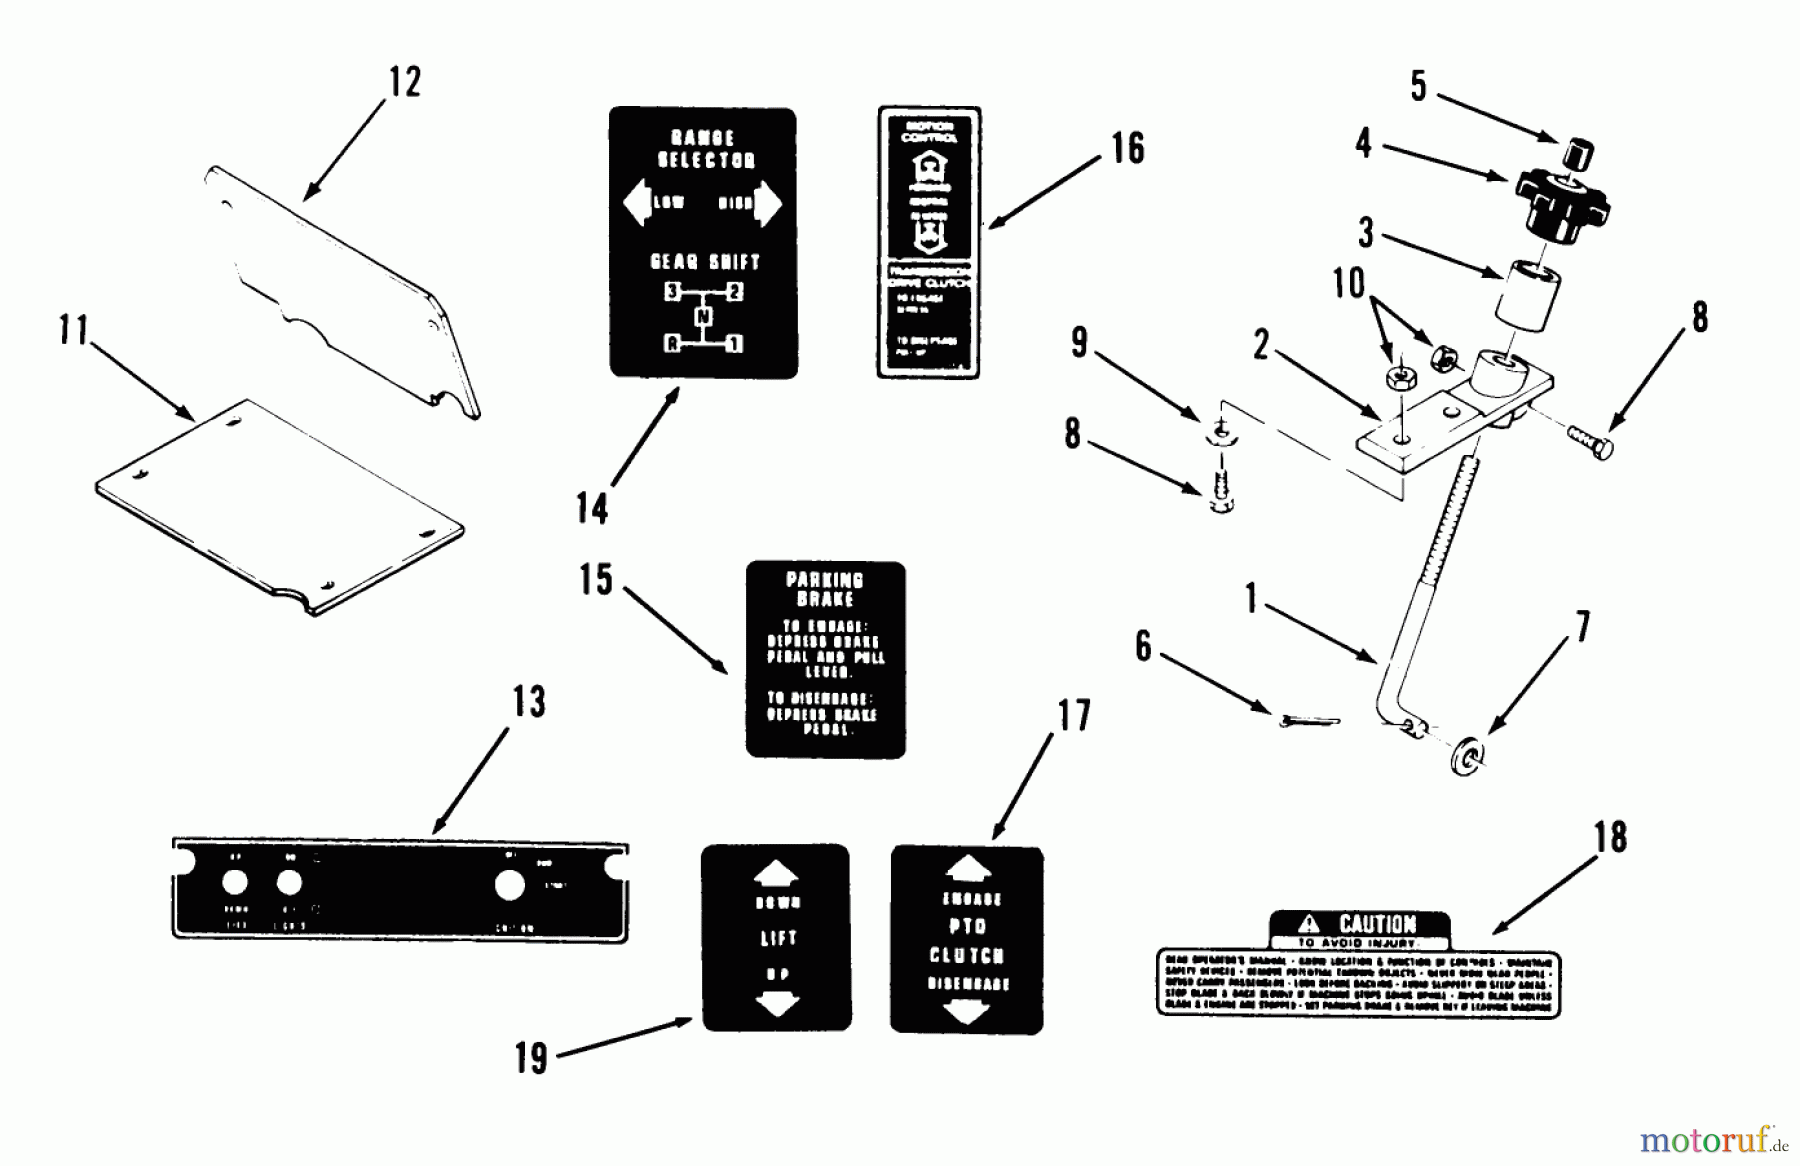  Toro Neu Accessories, Mower 86726 - Toro Dial-A-Hite, 1986 DIAL-A-HITE PARTS LIST FACTORY ORDER NO. 86726